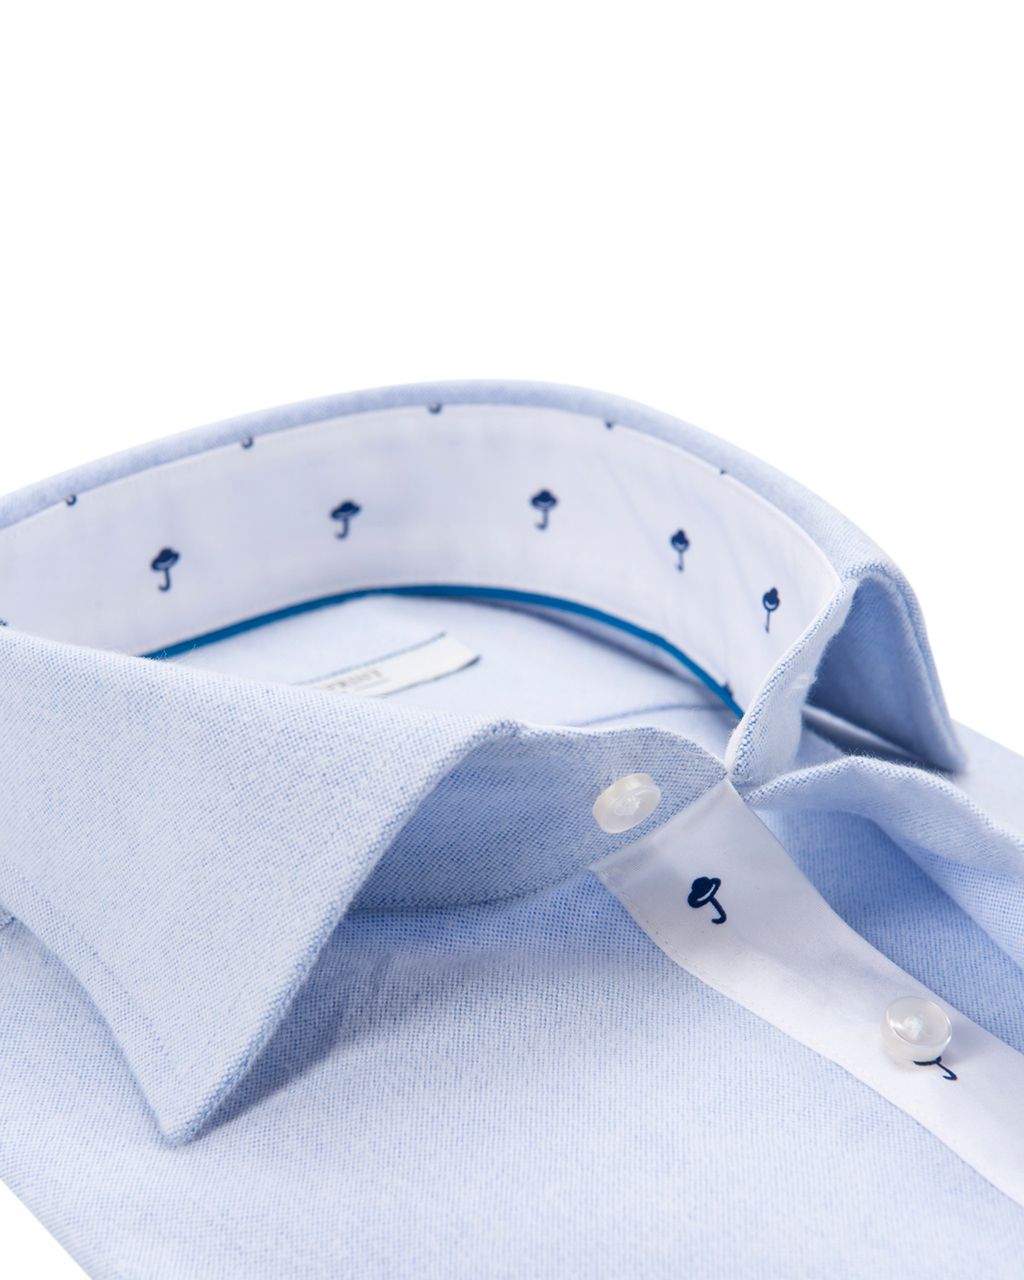 The BLUEPRINT Premium Trendy overhemd LM Lichtblauw uni 050600-001-L